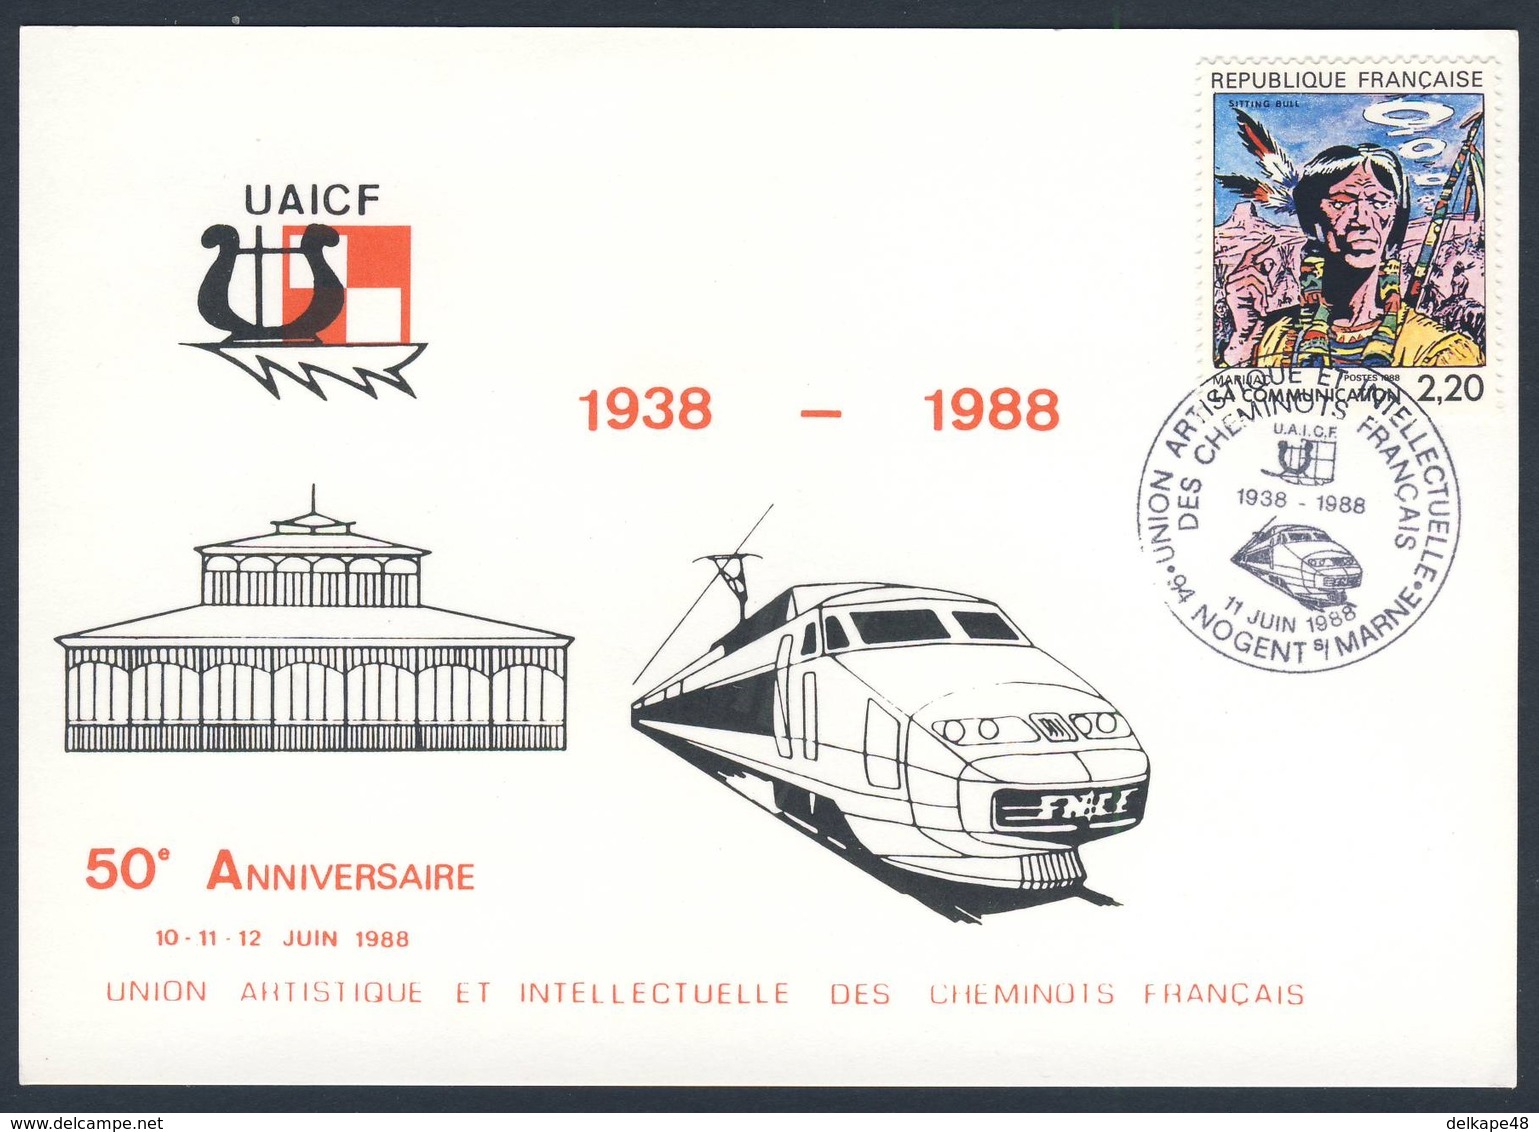 France Rep. Française 1988 Postcard Postkarte Carte Postale - 50e Ann. UAICF 1938-1988 - Union Artistique Intellectuelle - Treinen